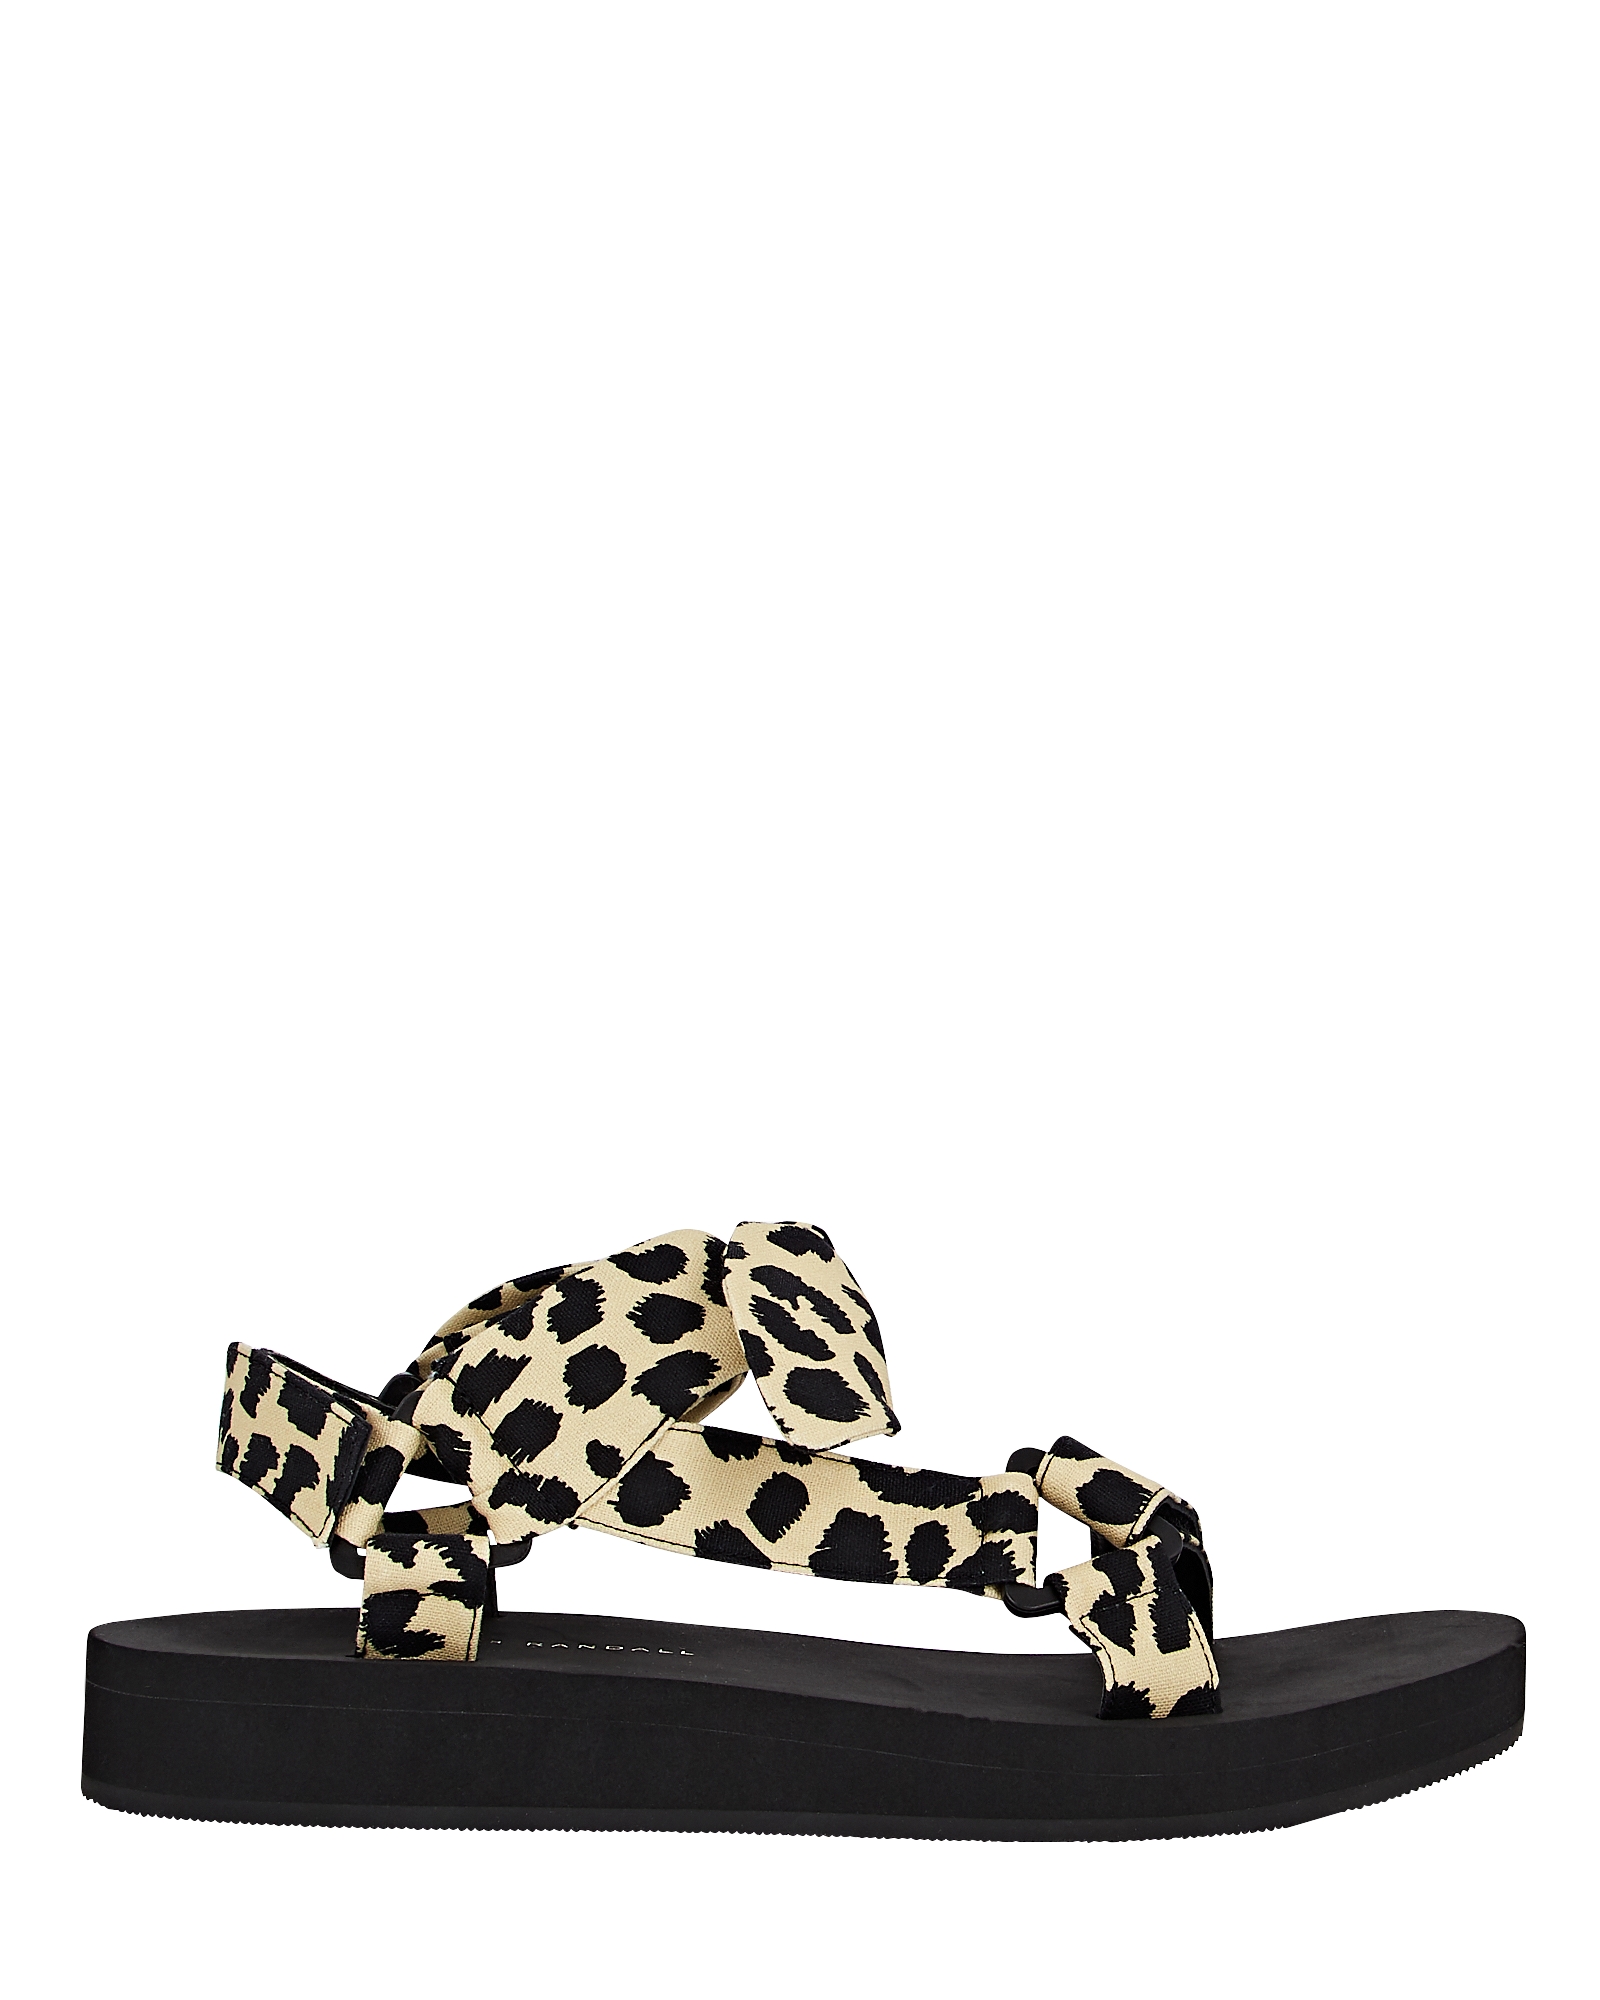 Loeffler Randall Maisie Leopard Canvas Sandals | INTERMIX®